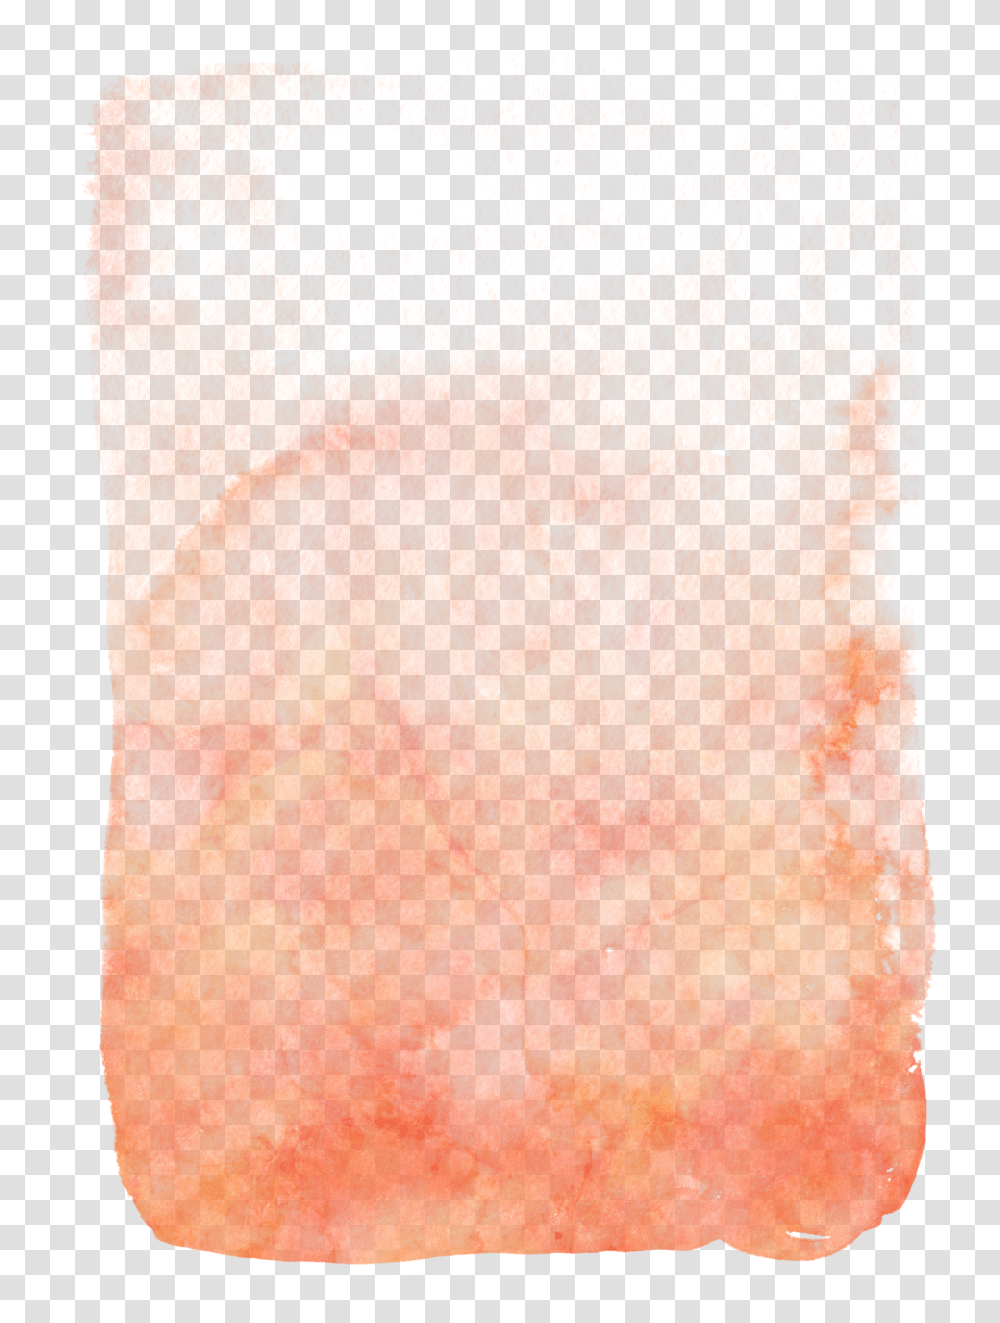 Coral Orange Free Watercolor Brush Stroke Watercolor Paint Transparent Png